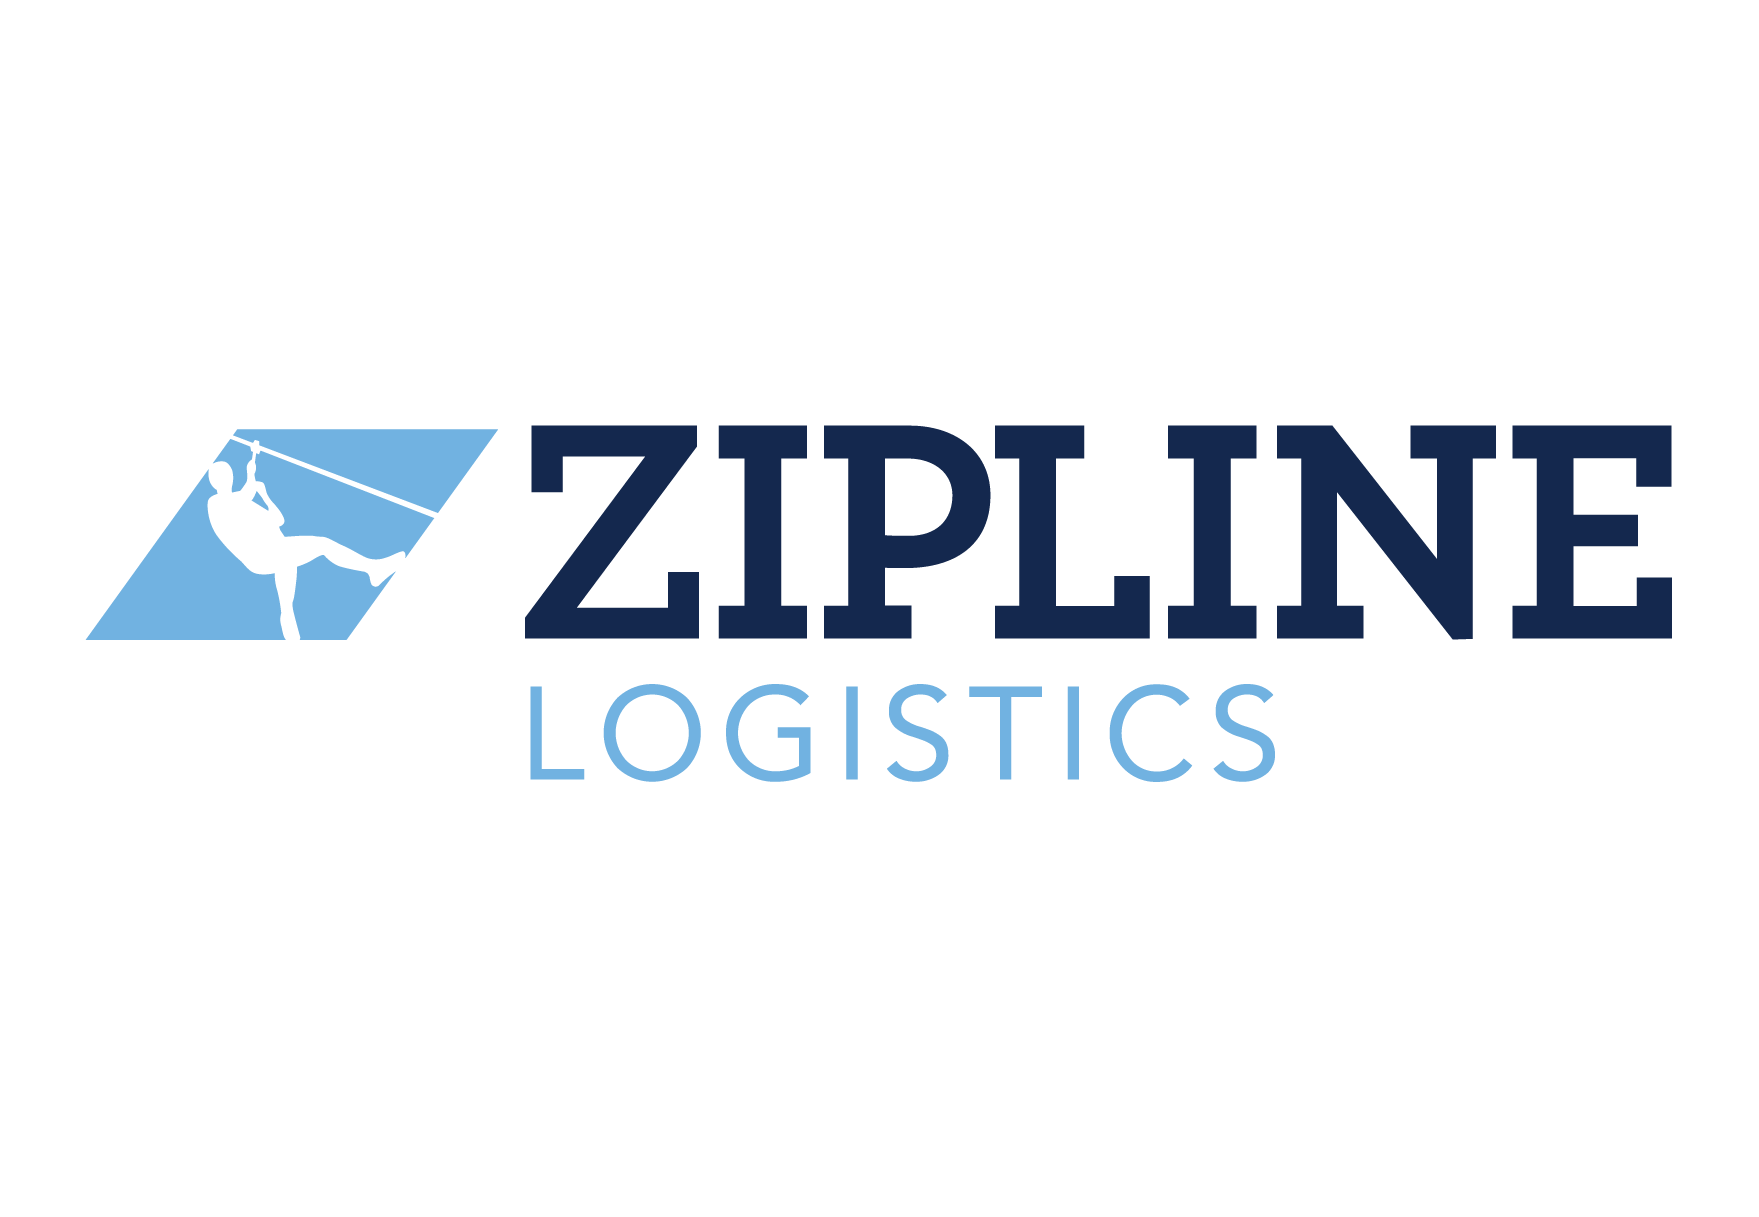 Zipline Logistics